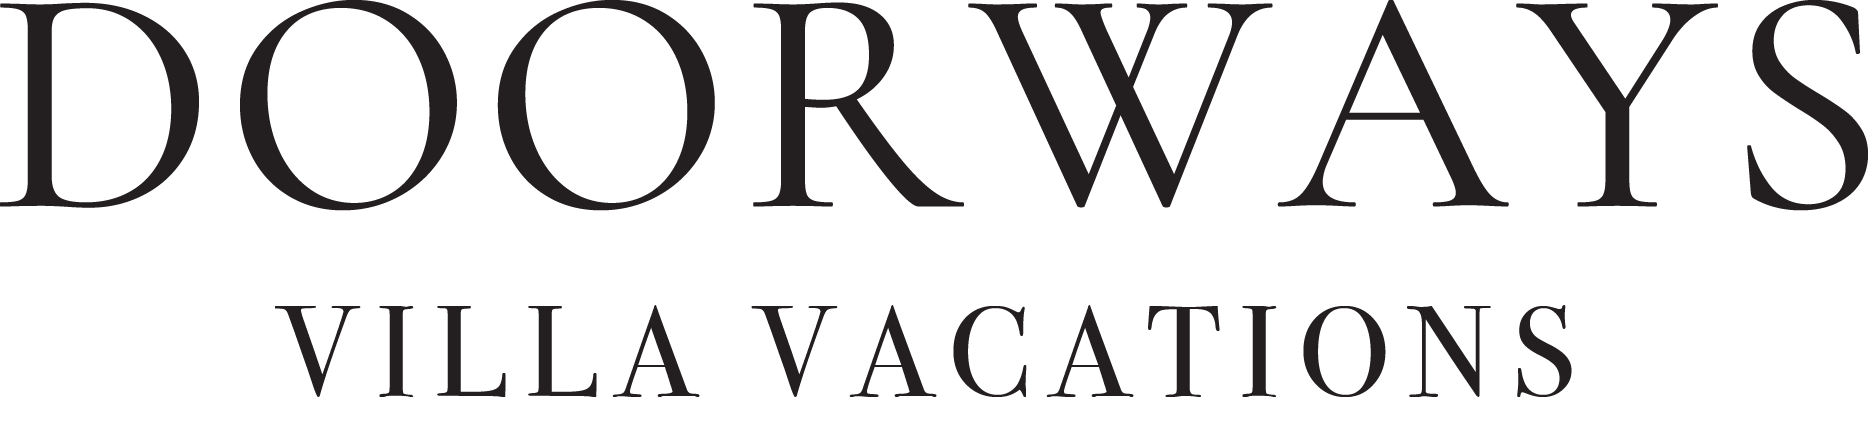 Doorways Villa Vacation Logo